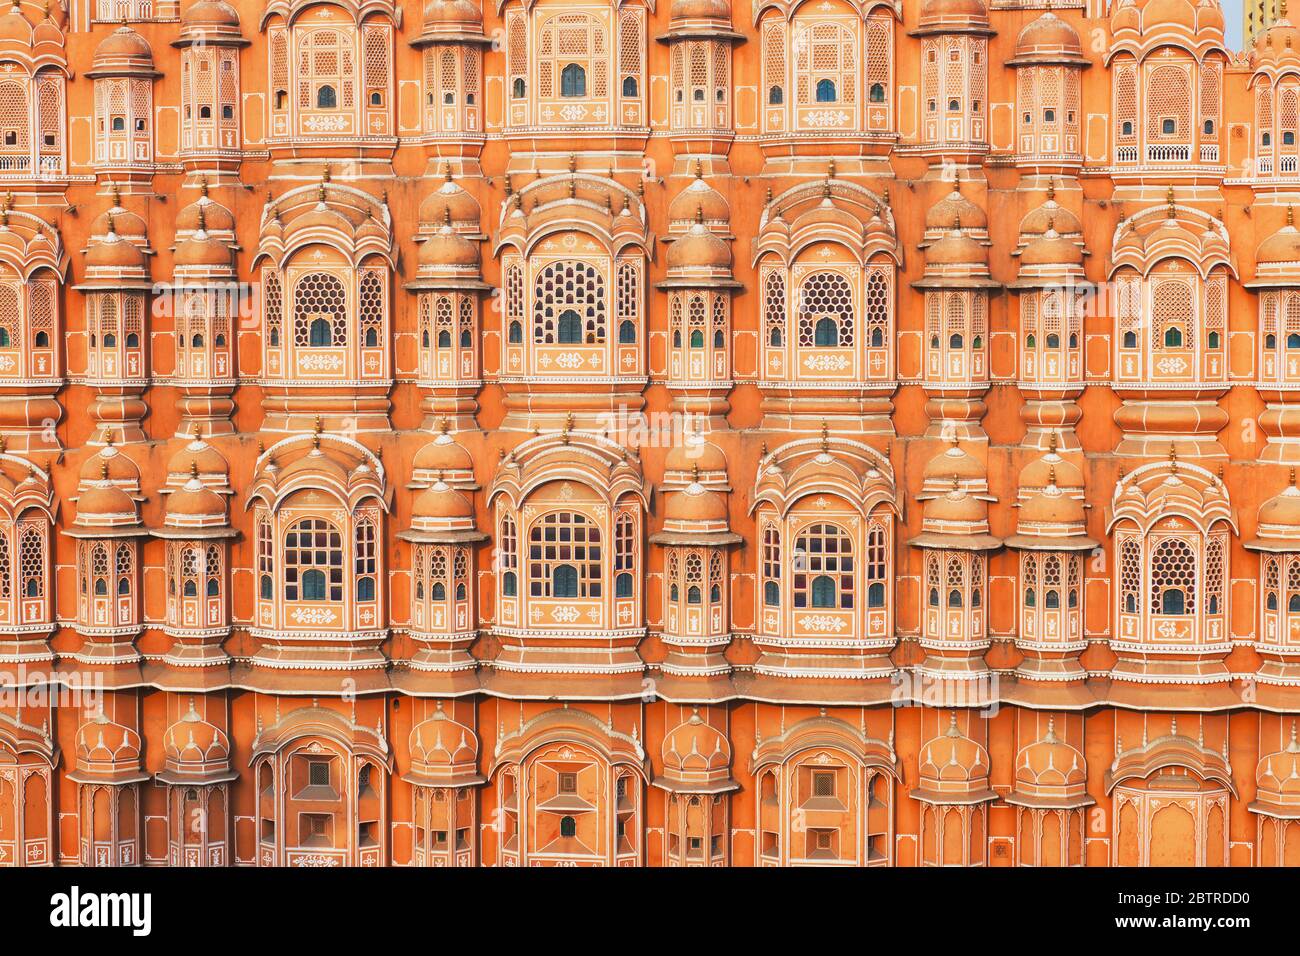 Famoso punto di riferimento indiano Rajasthan - Hawa Mahal palazzo (Palazzo dei Venti) facciata, Jaipur, Rajasthan, India Foto Stock